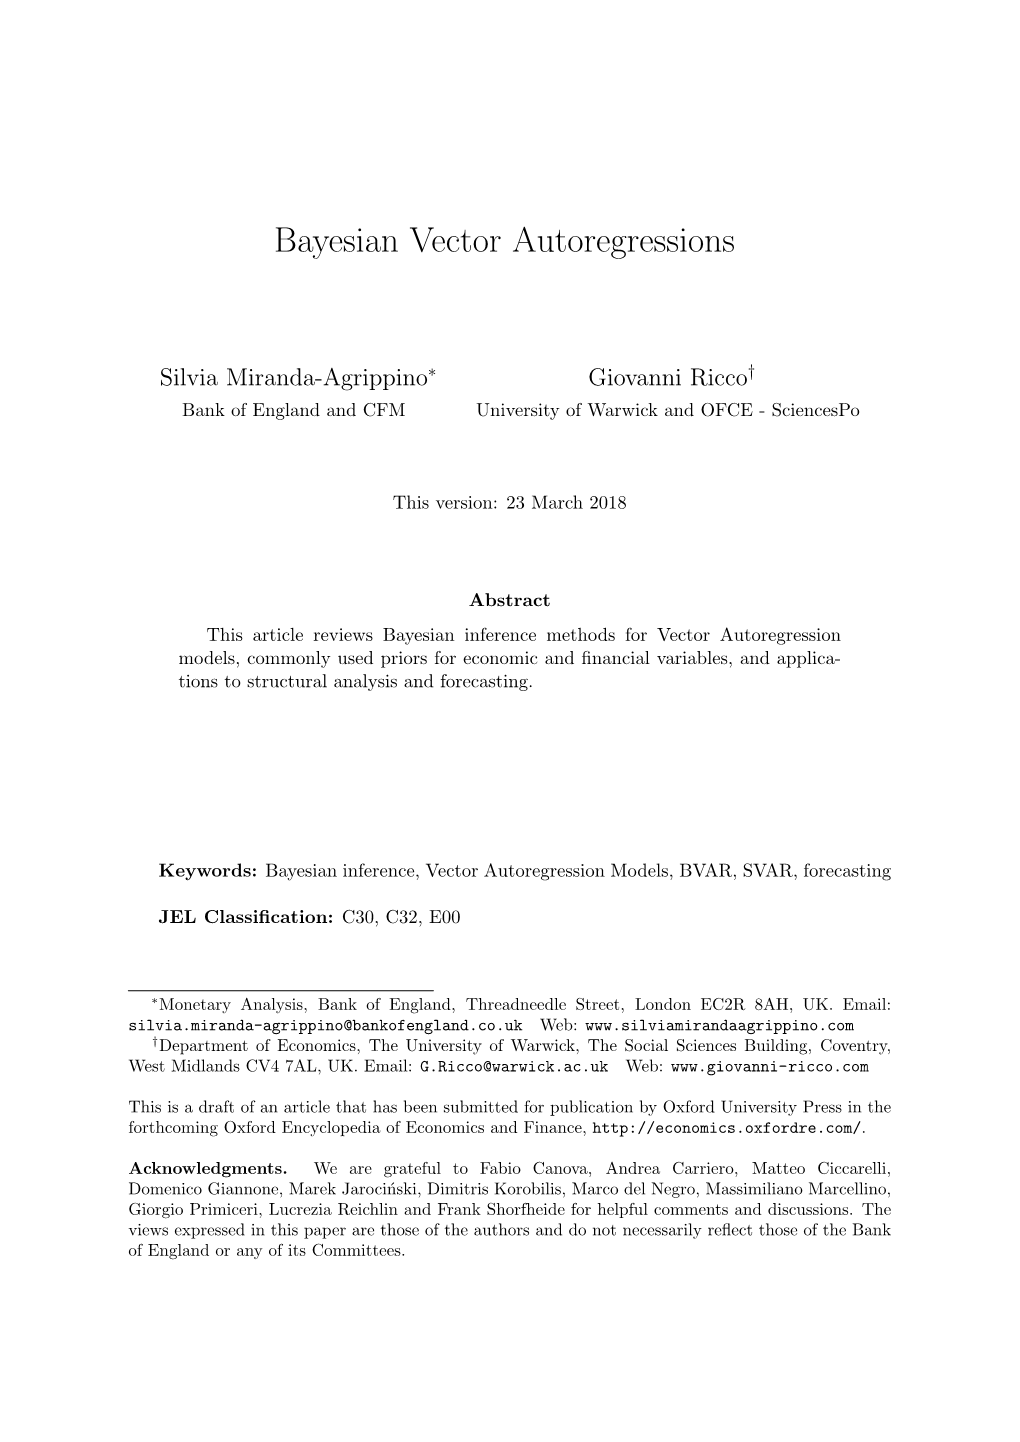 Bayesian Vector Autoregressions